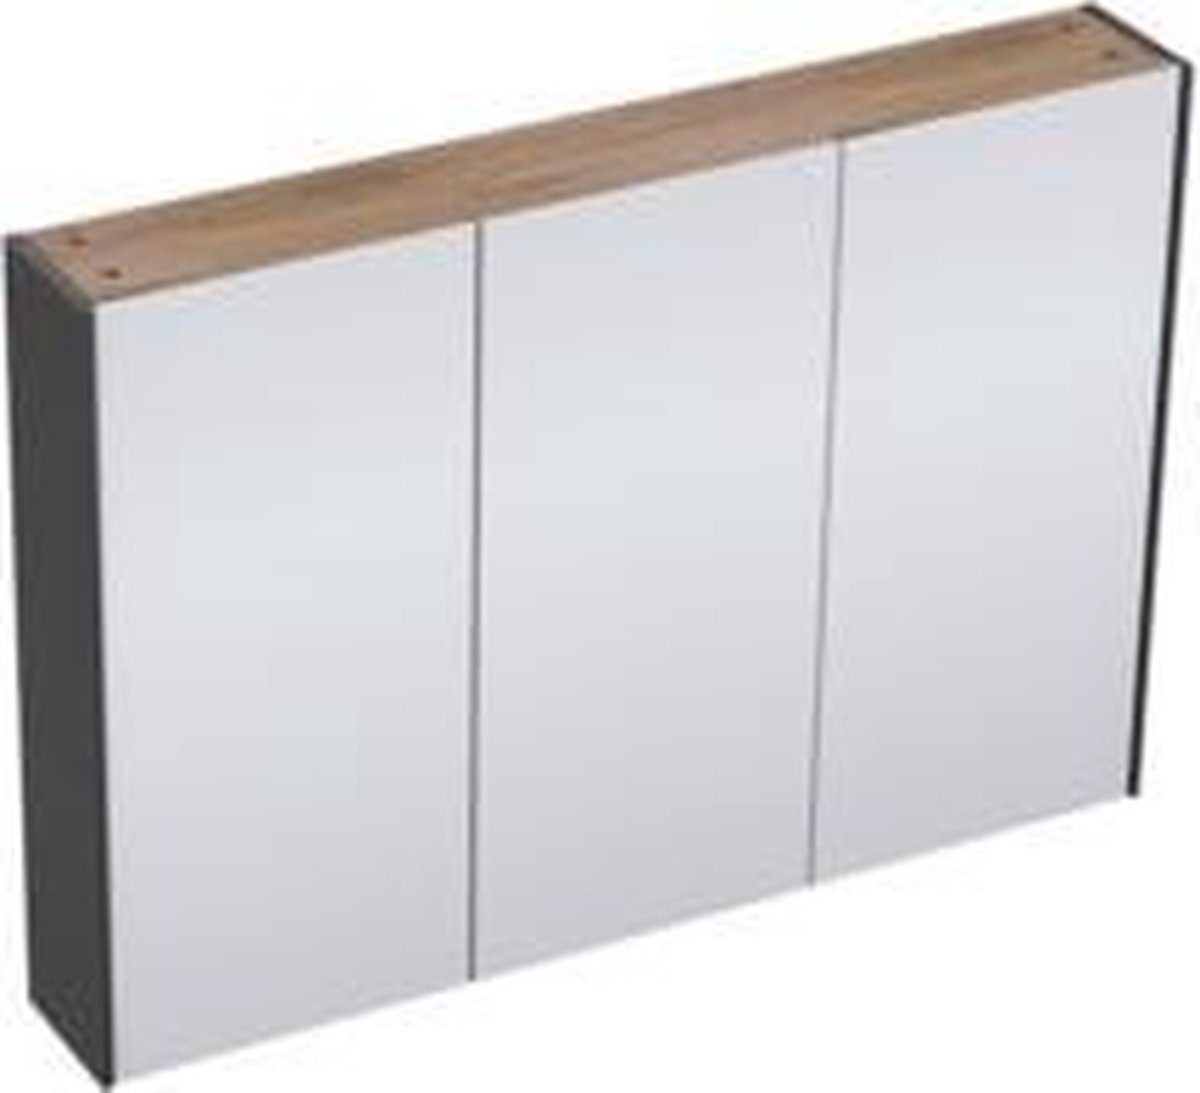 Adema Industrial Spiegelkast 100x70x15cm 3 deuren hout/zwart